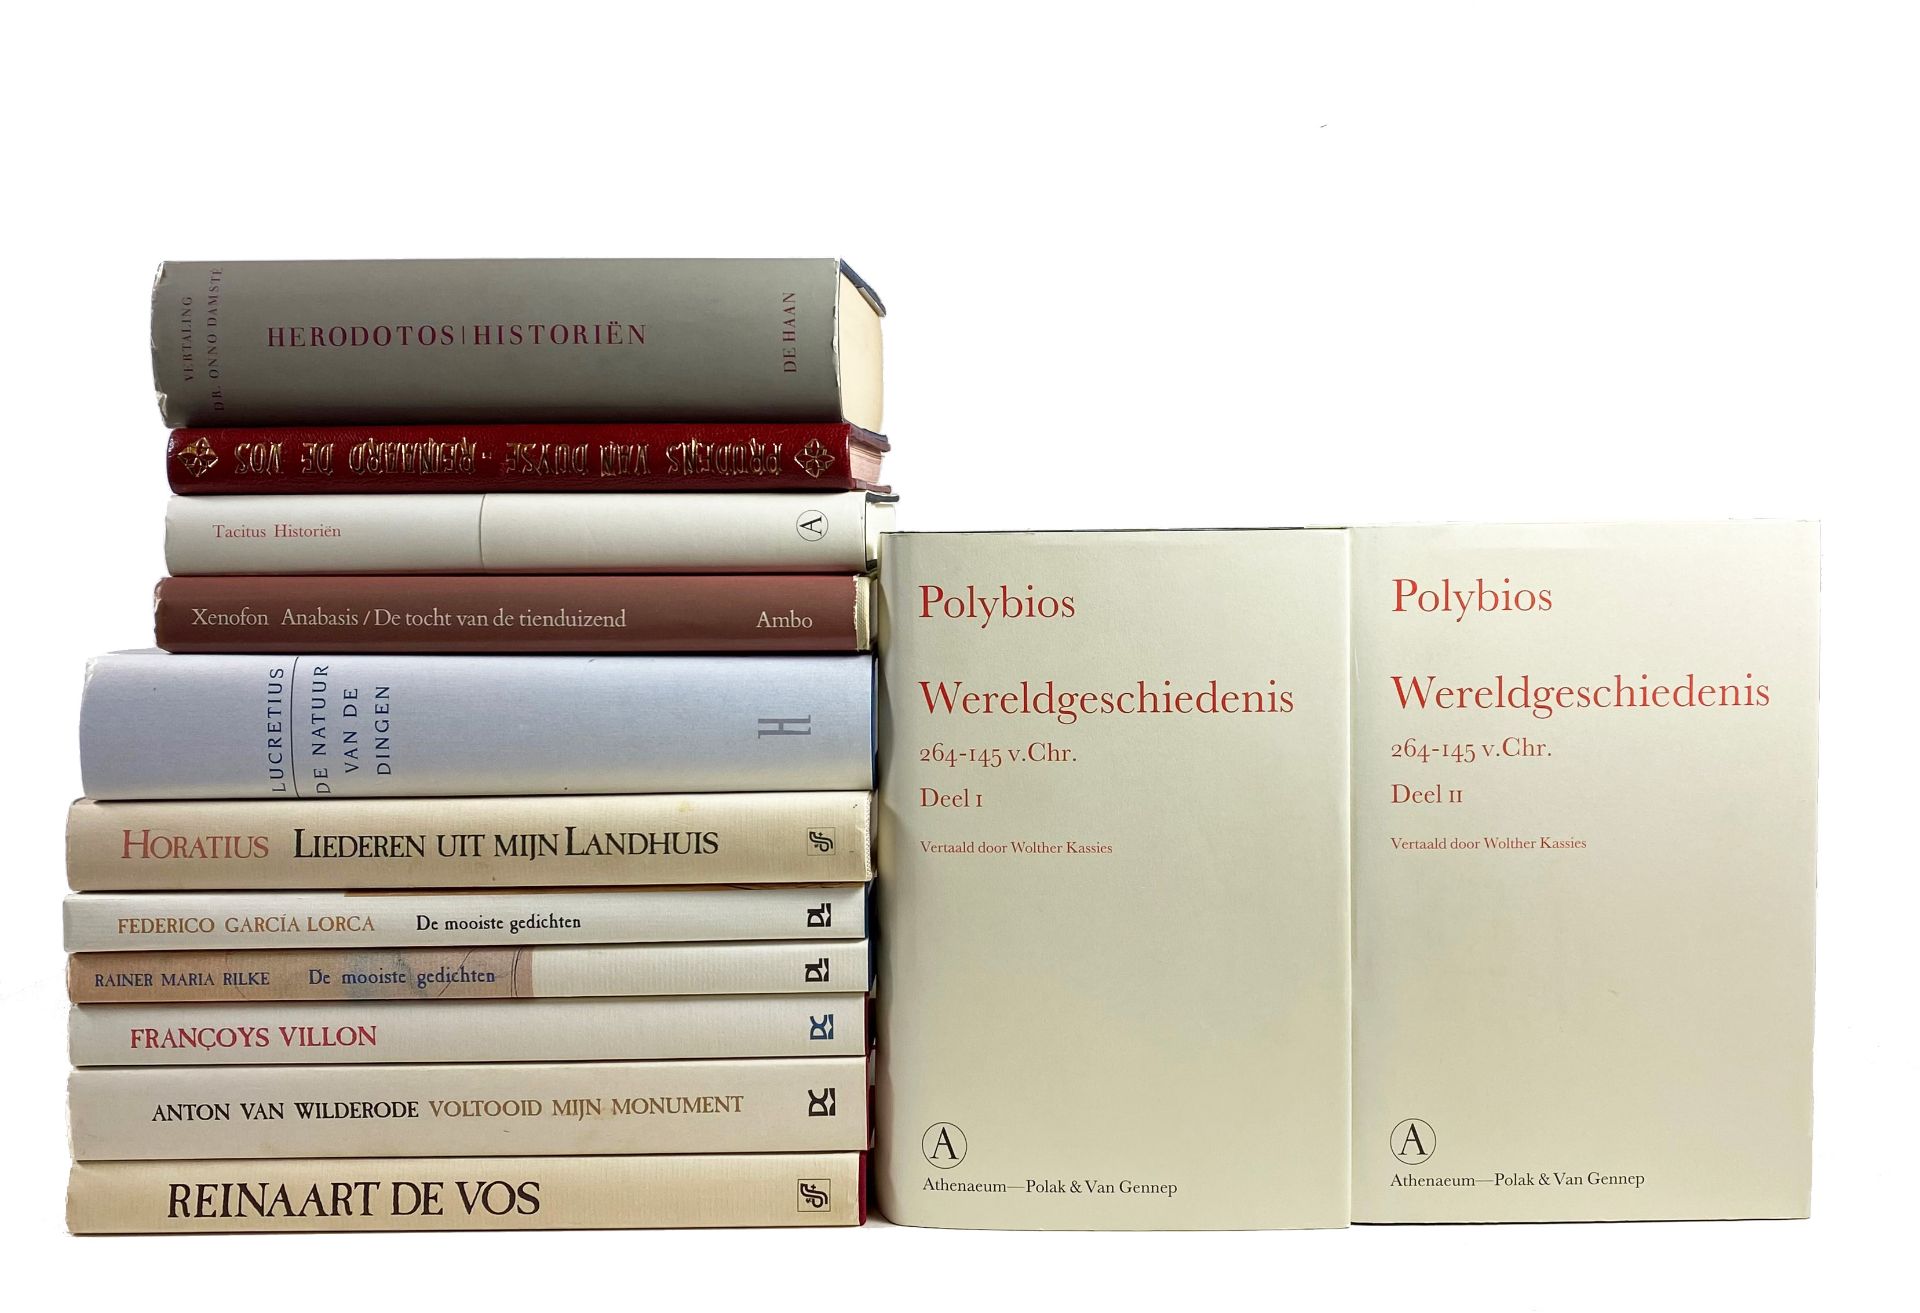 POLYBIUS. Wereldgeschiedenis, 264-145 v. Chr. Vert. d. W. Kassies. 2007. 2 vols